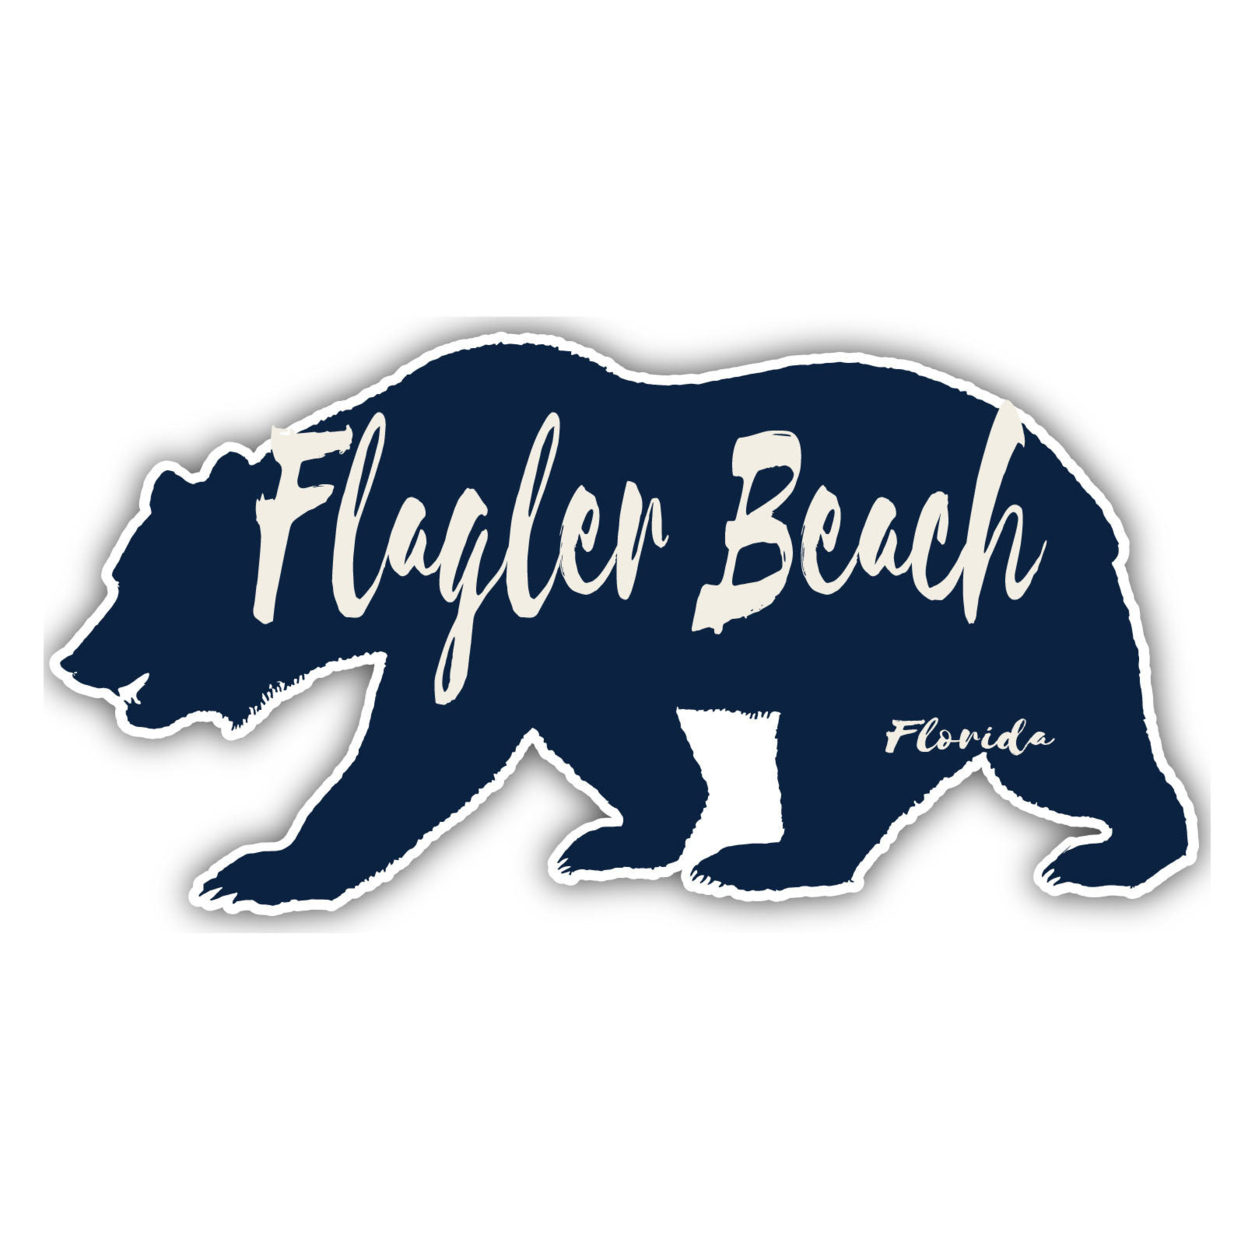 Flagler Beach Florida Souvenir Decorative Stickers (Choose Theme And Size) - Single Unit, 8-Inch, Bear